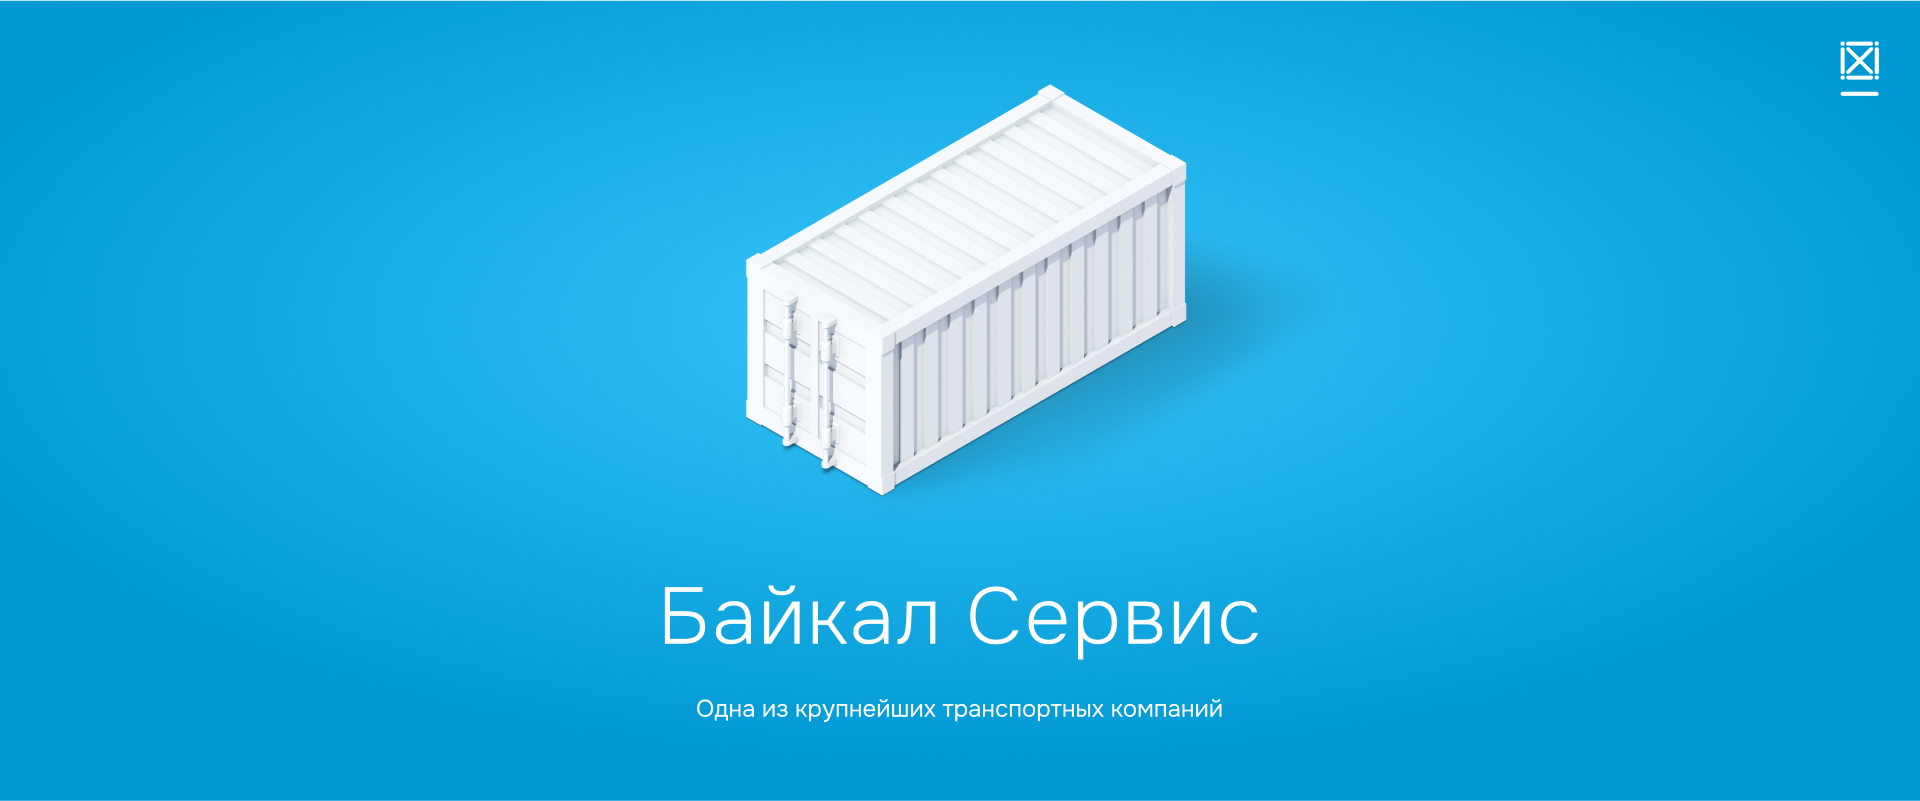 Логотип "Байкал Сервис"